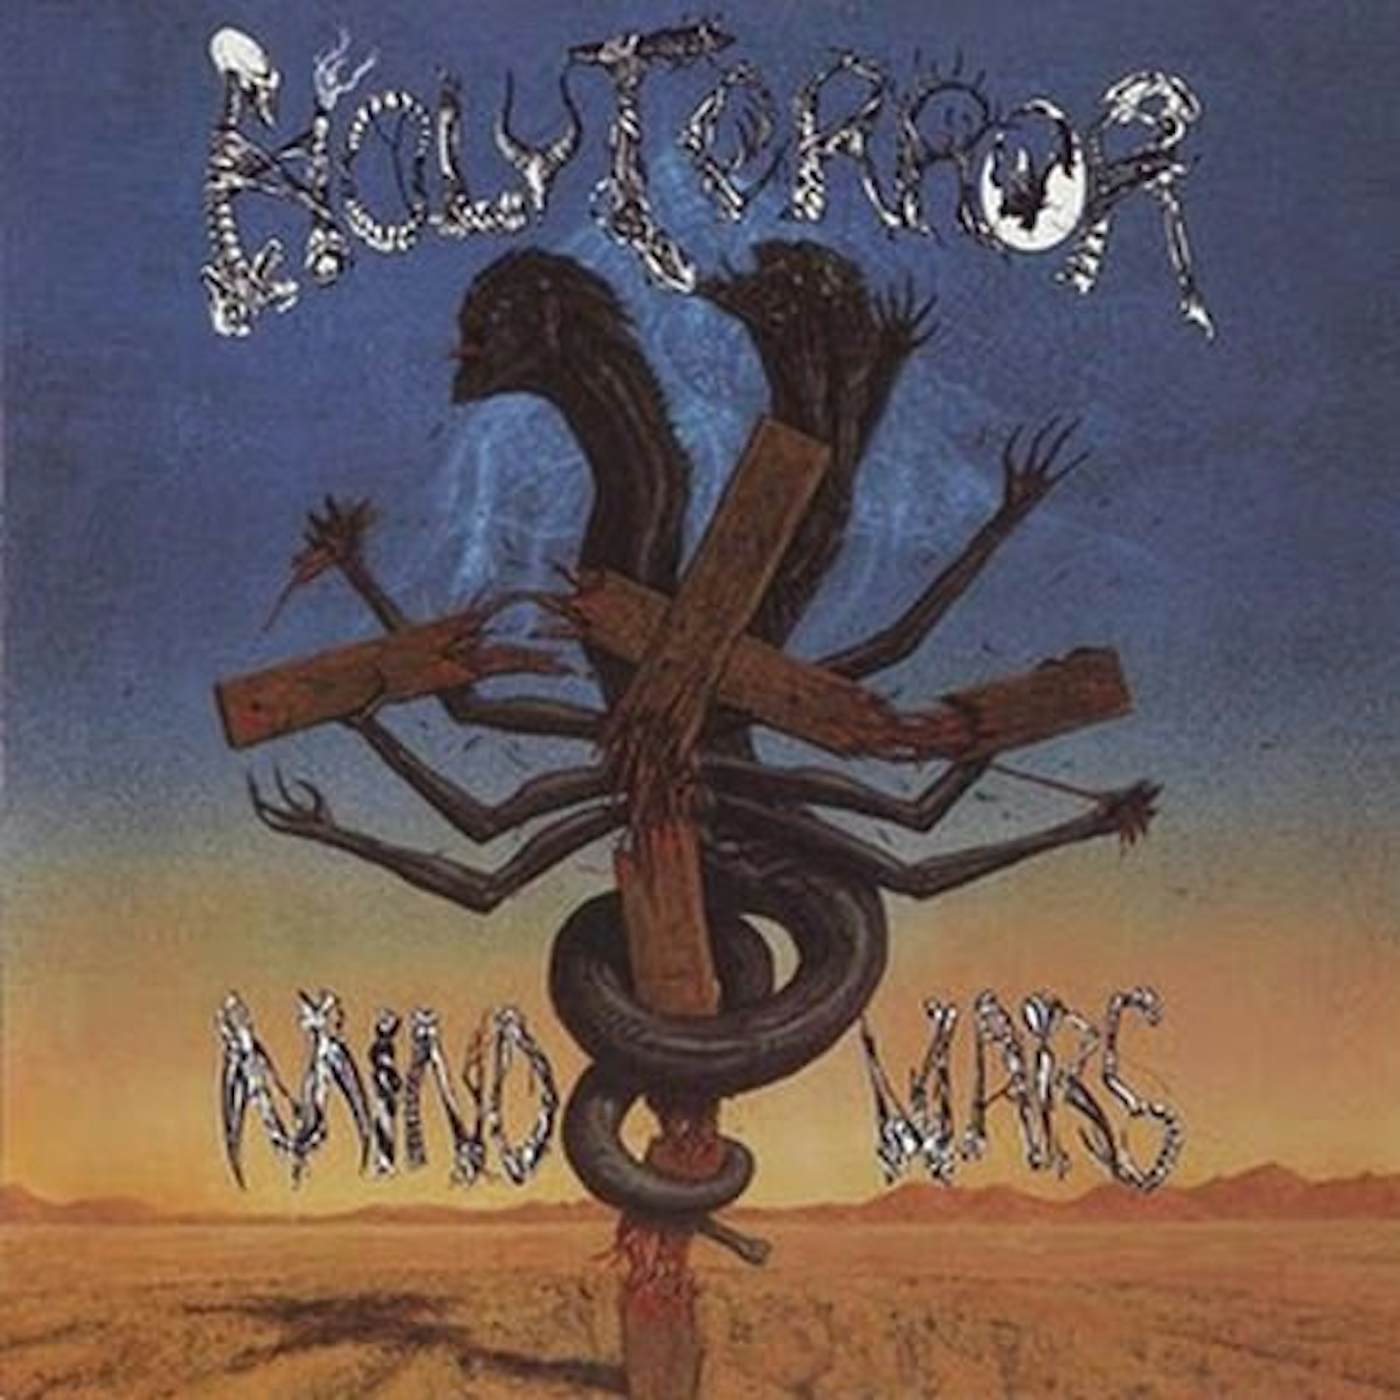 Holy Terror Mind Wars Vinyl Record